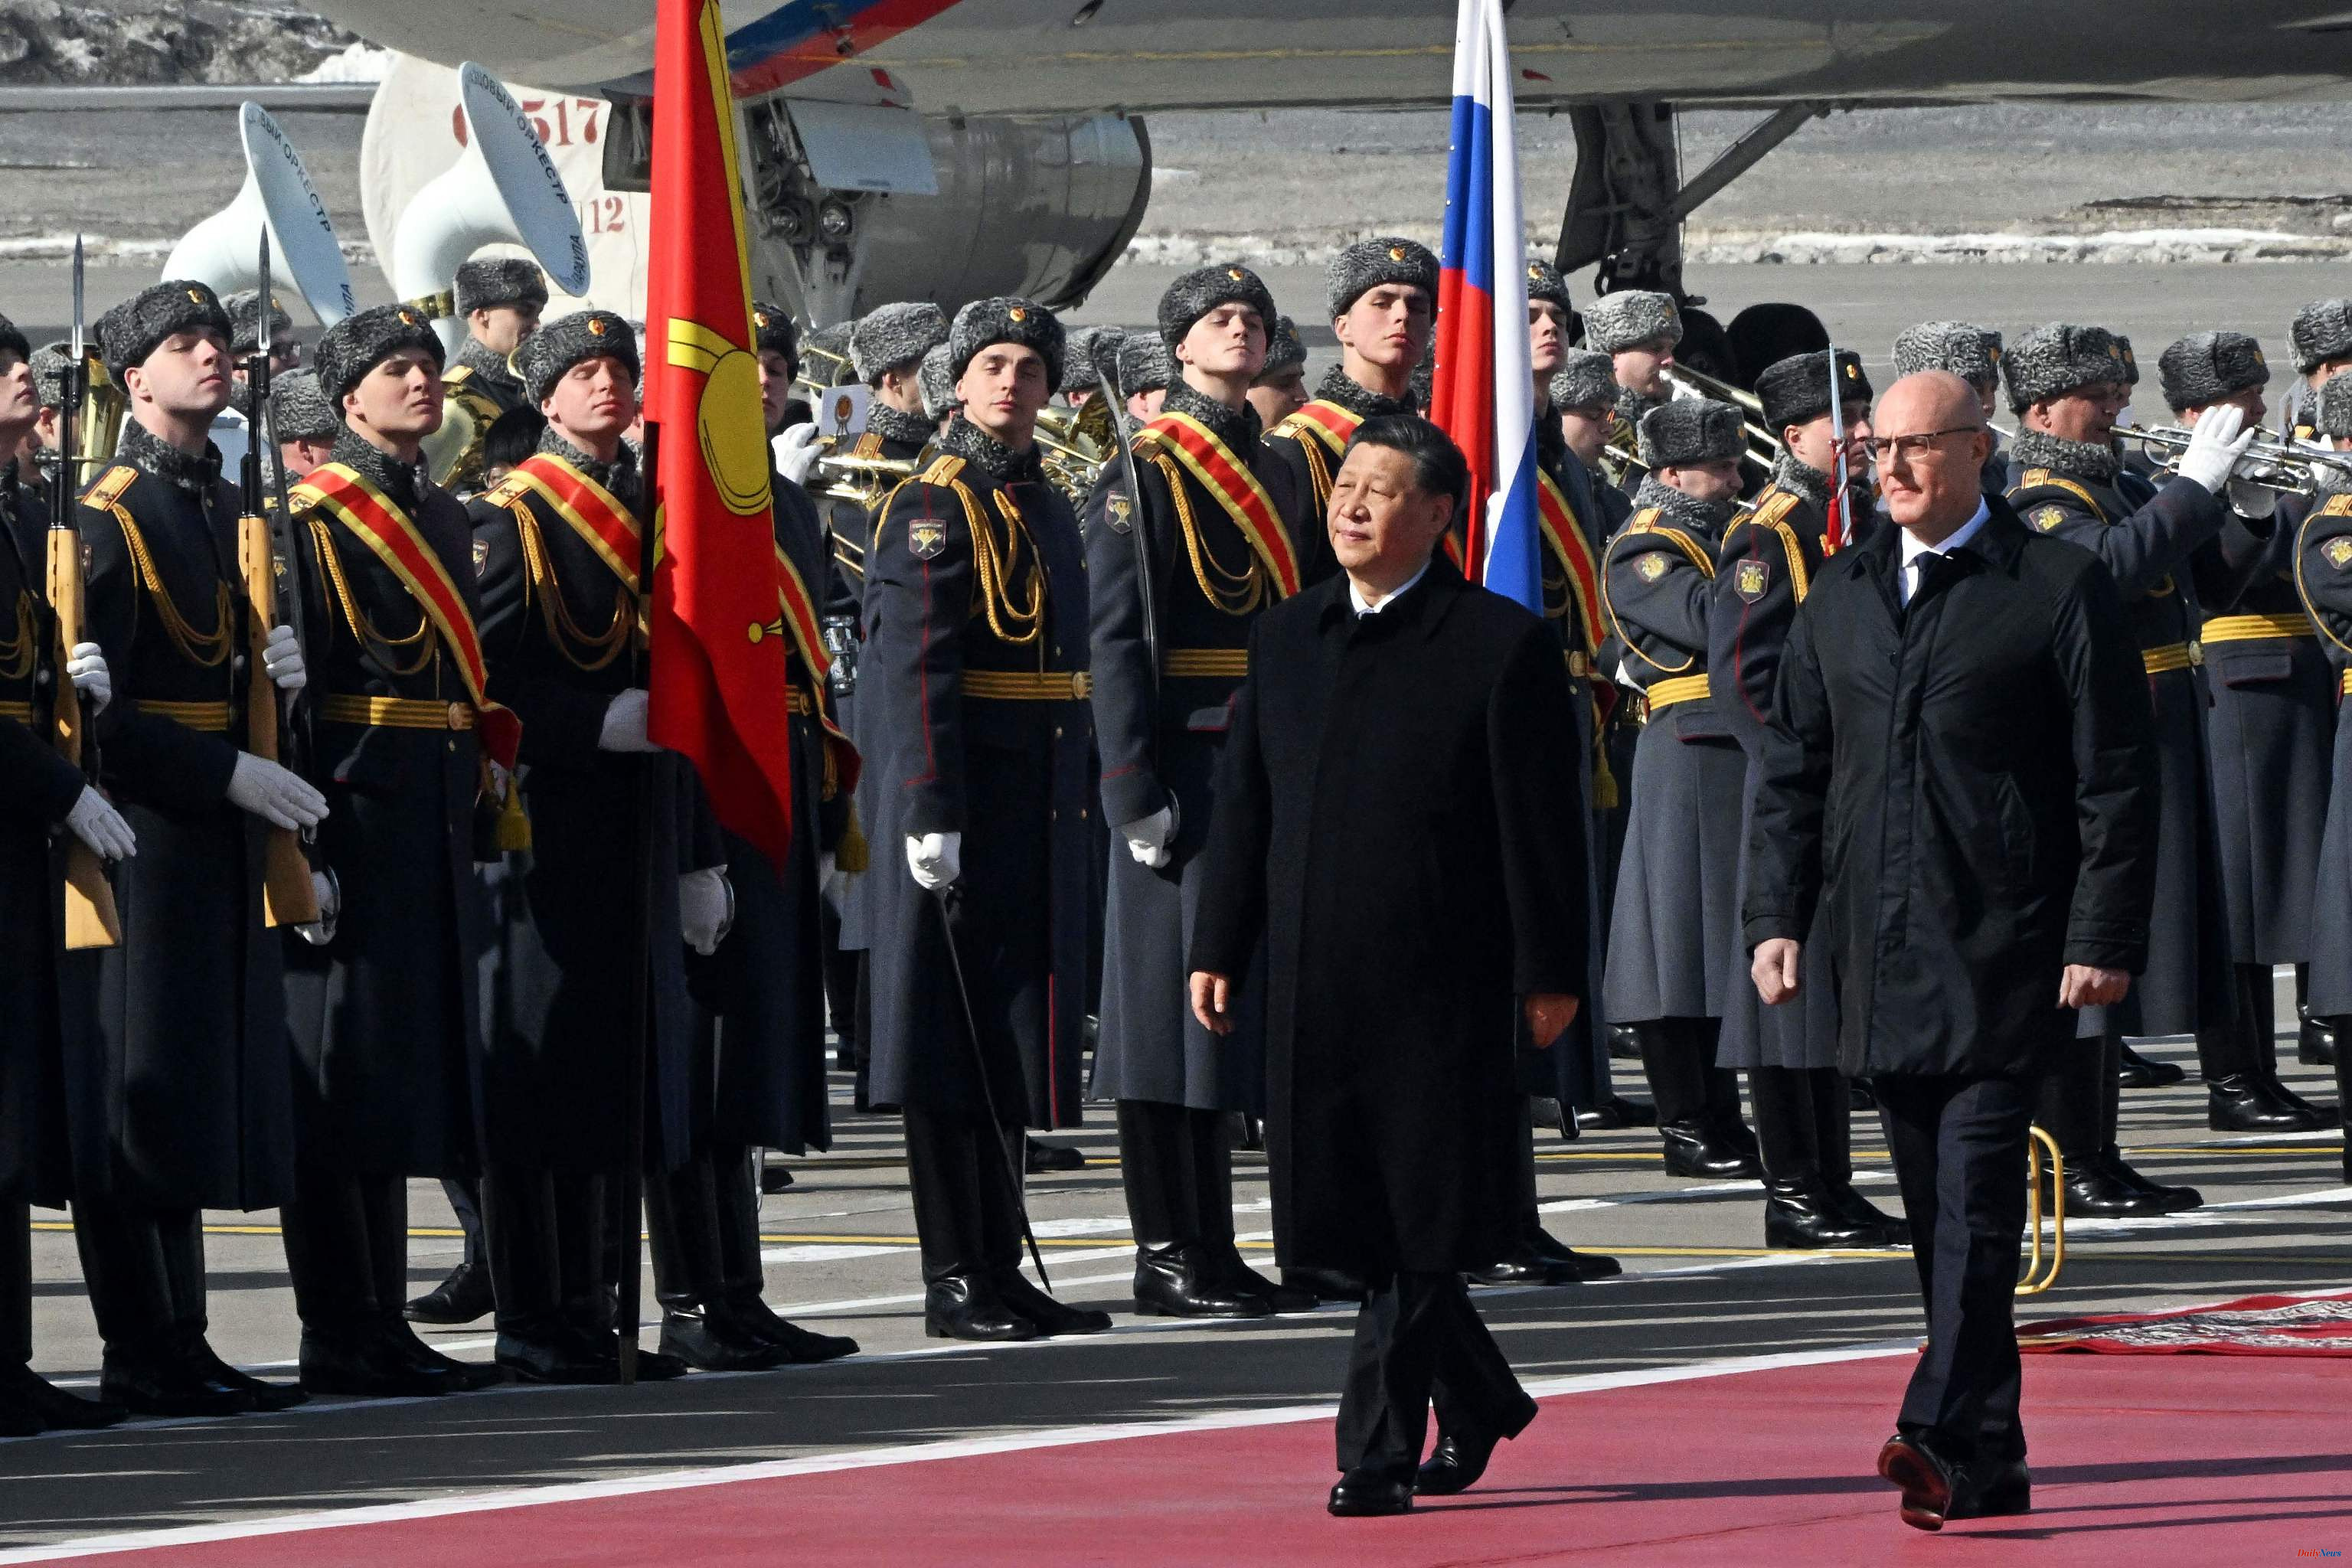 War Xi Jinping arrives in Moscow to meet Putin